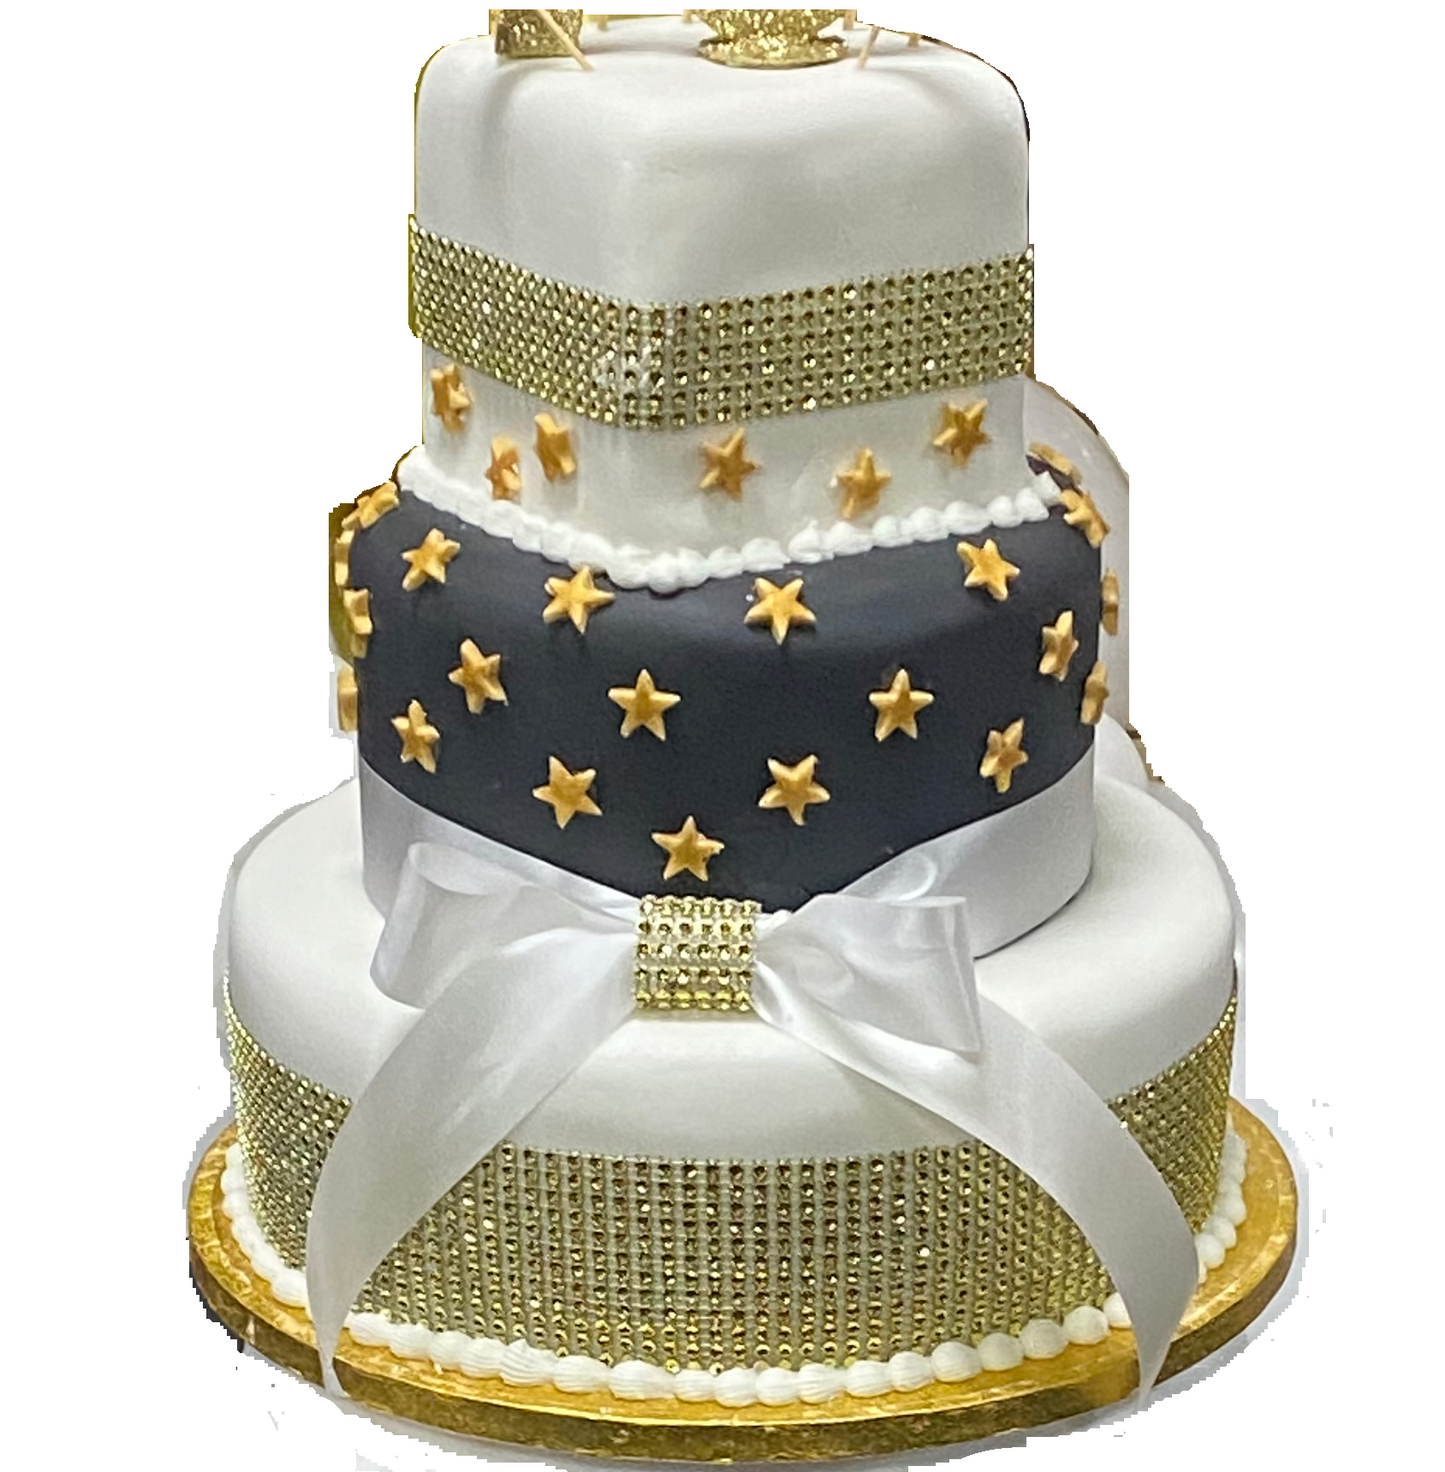 Three tier - Celebration Cake, Rum Cake or Non-alcoholic cake